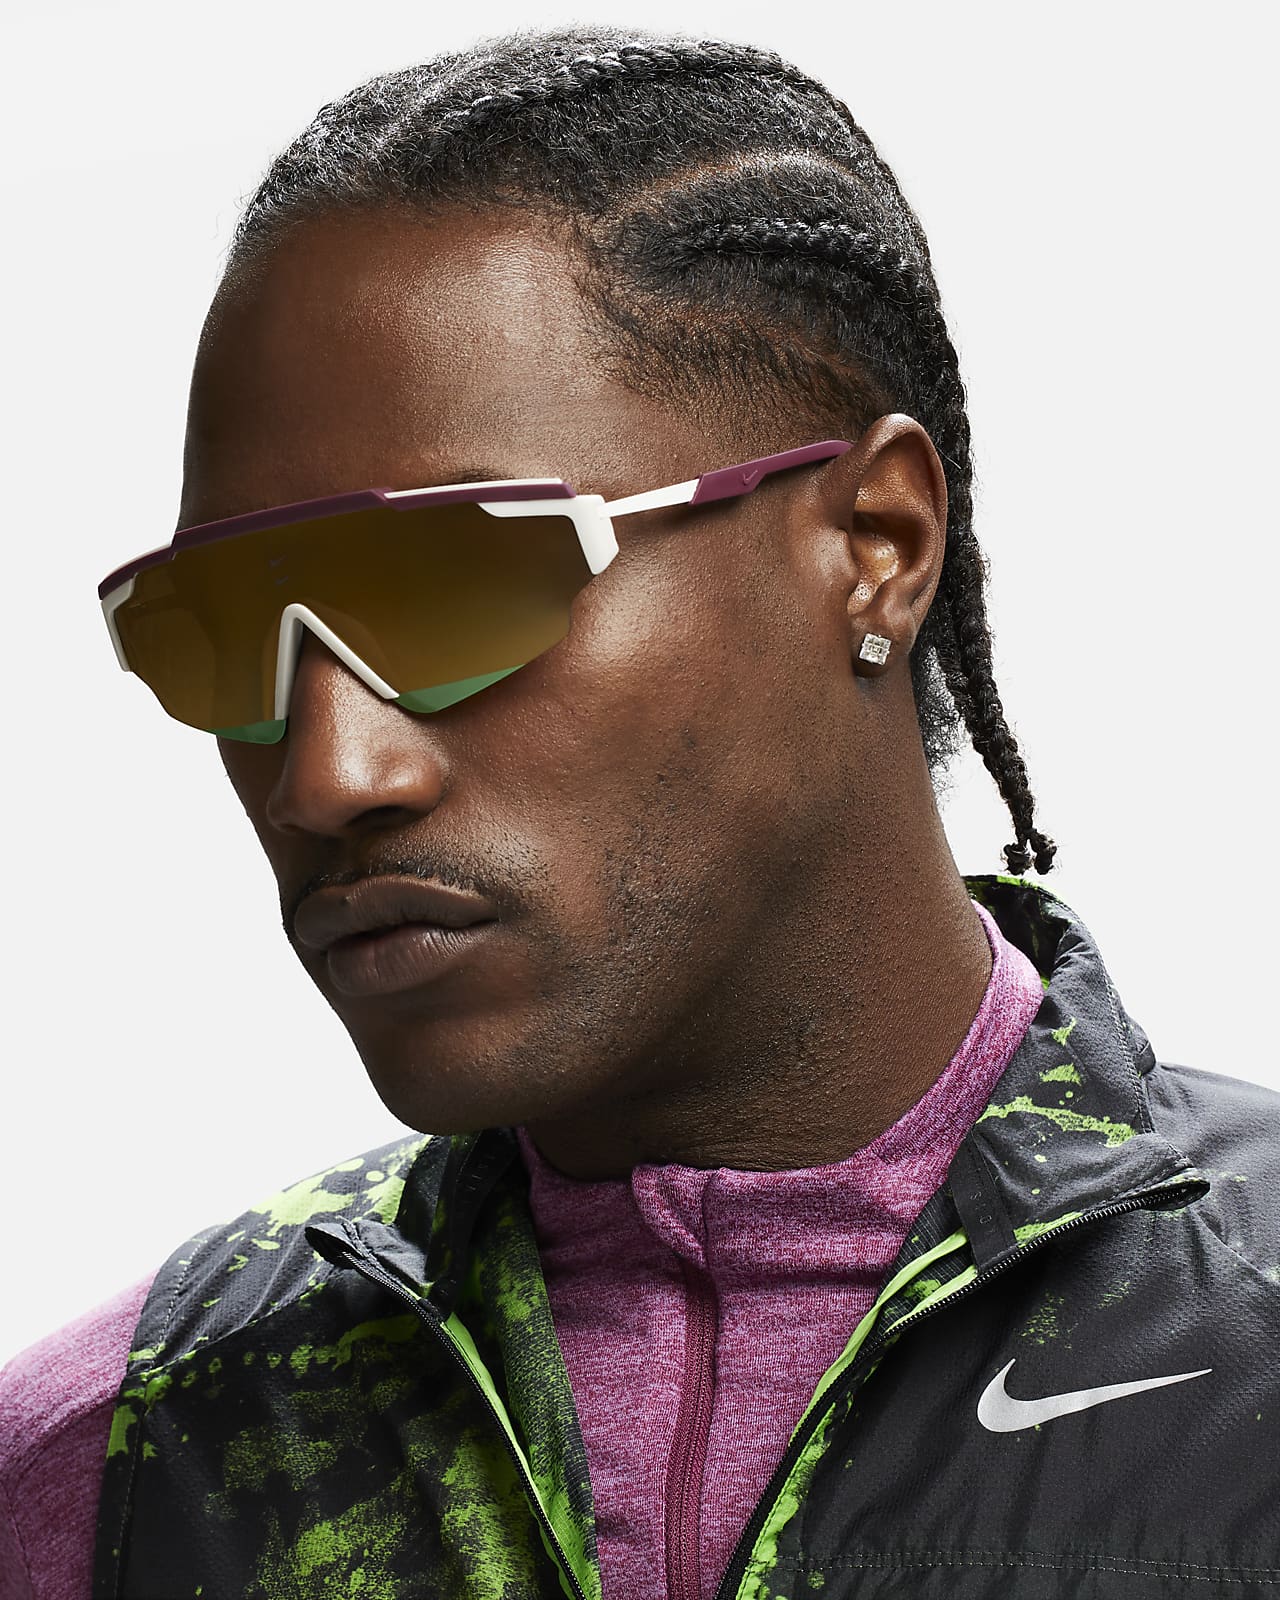 Nike Marquee Edge Mirrored Sunglasses